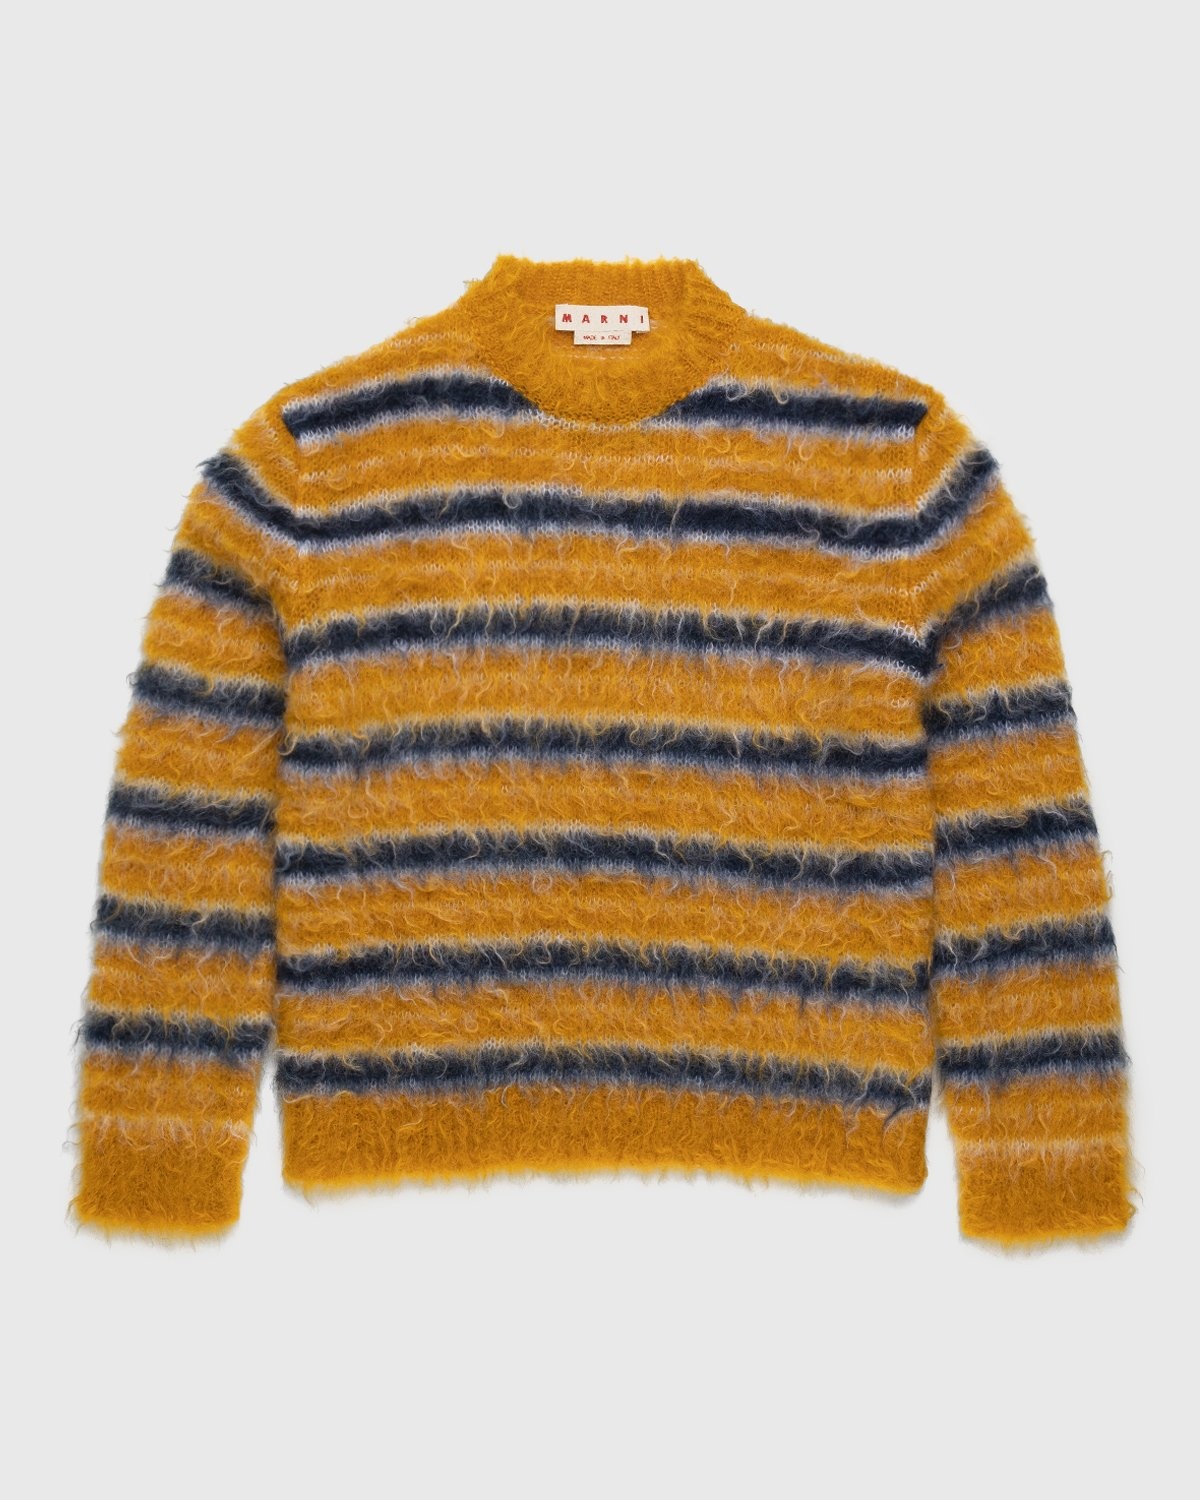 Marni – Striped Mohair Sweater Sunflower - Knitwear - Yellow - Image 1